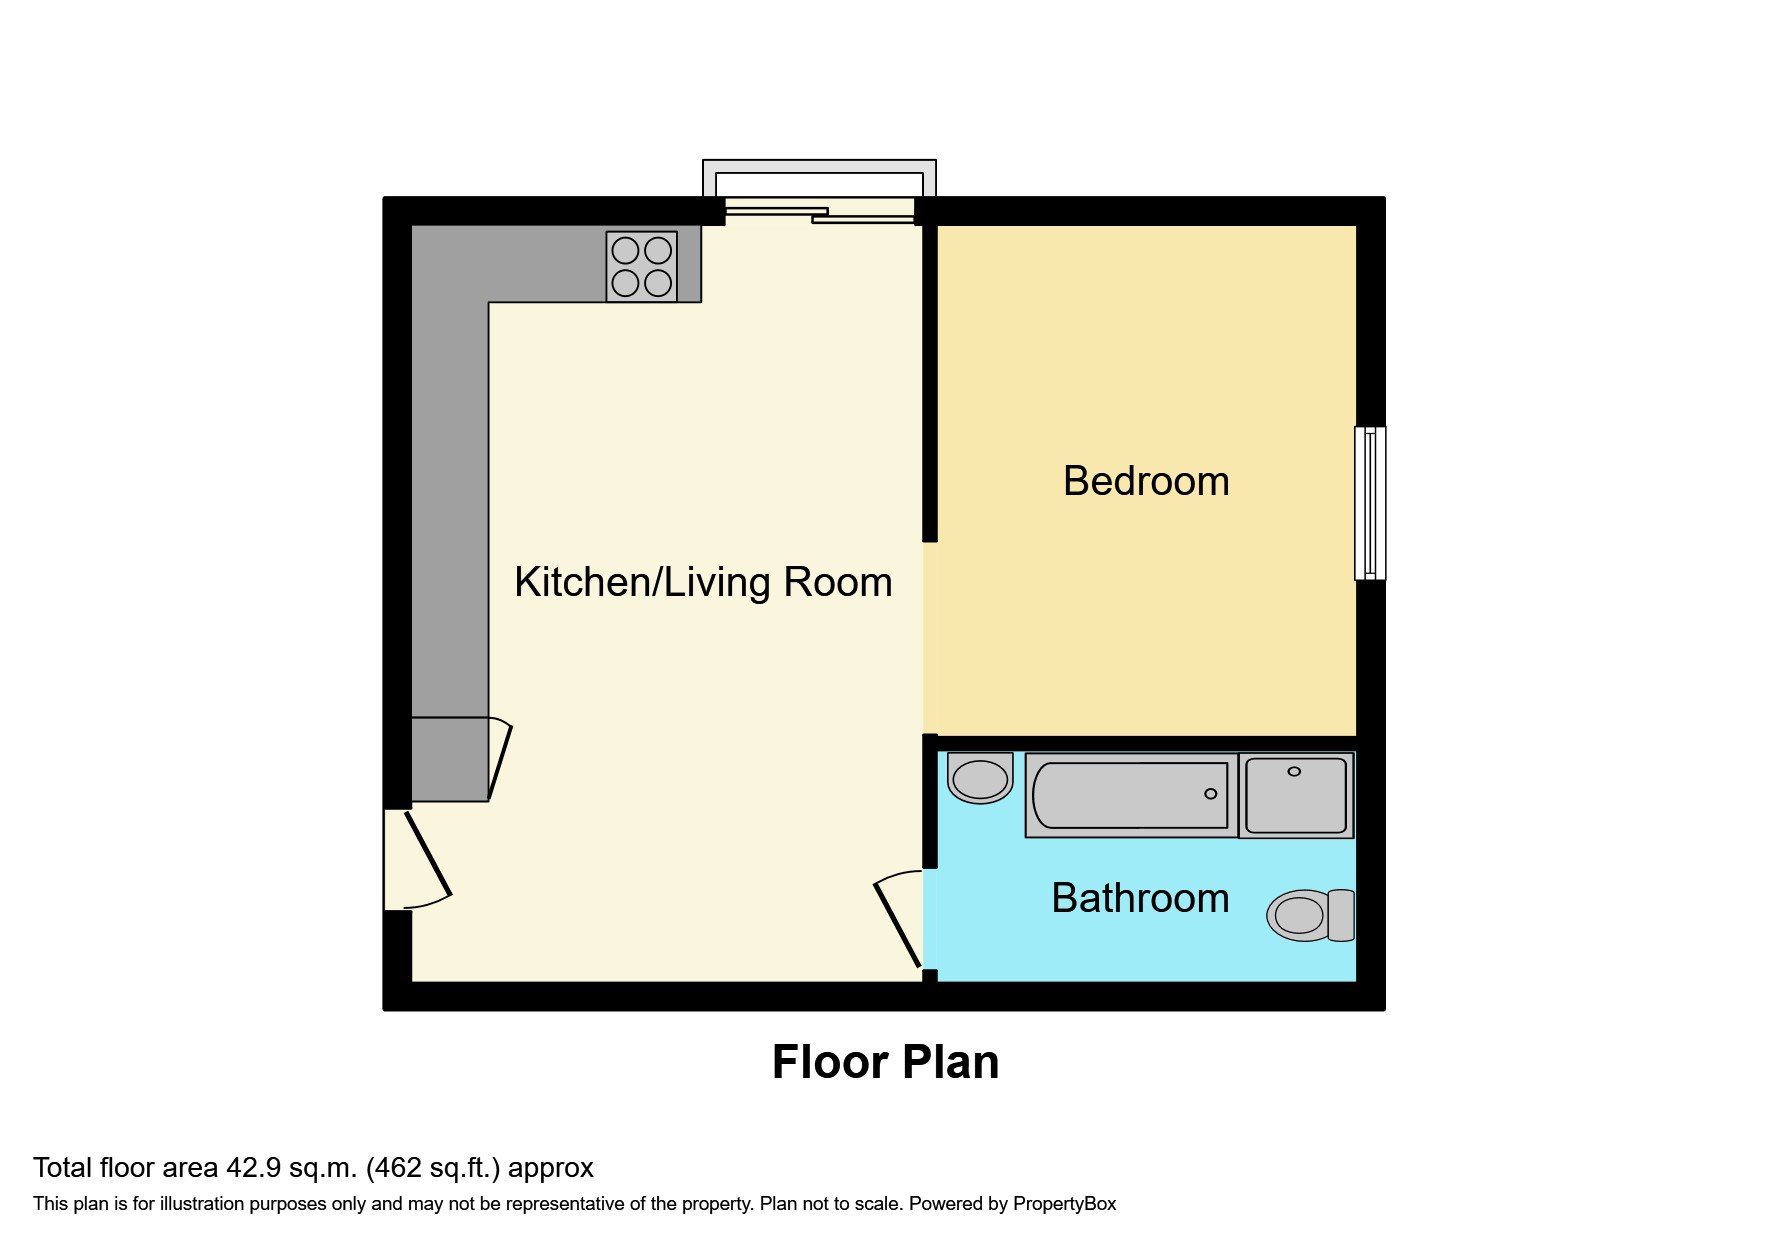 Studio flat to rent in Cotham Lawn Road, Cotham - Property Floorplan